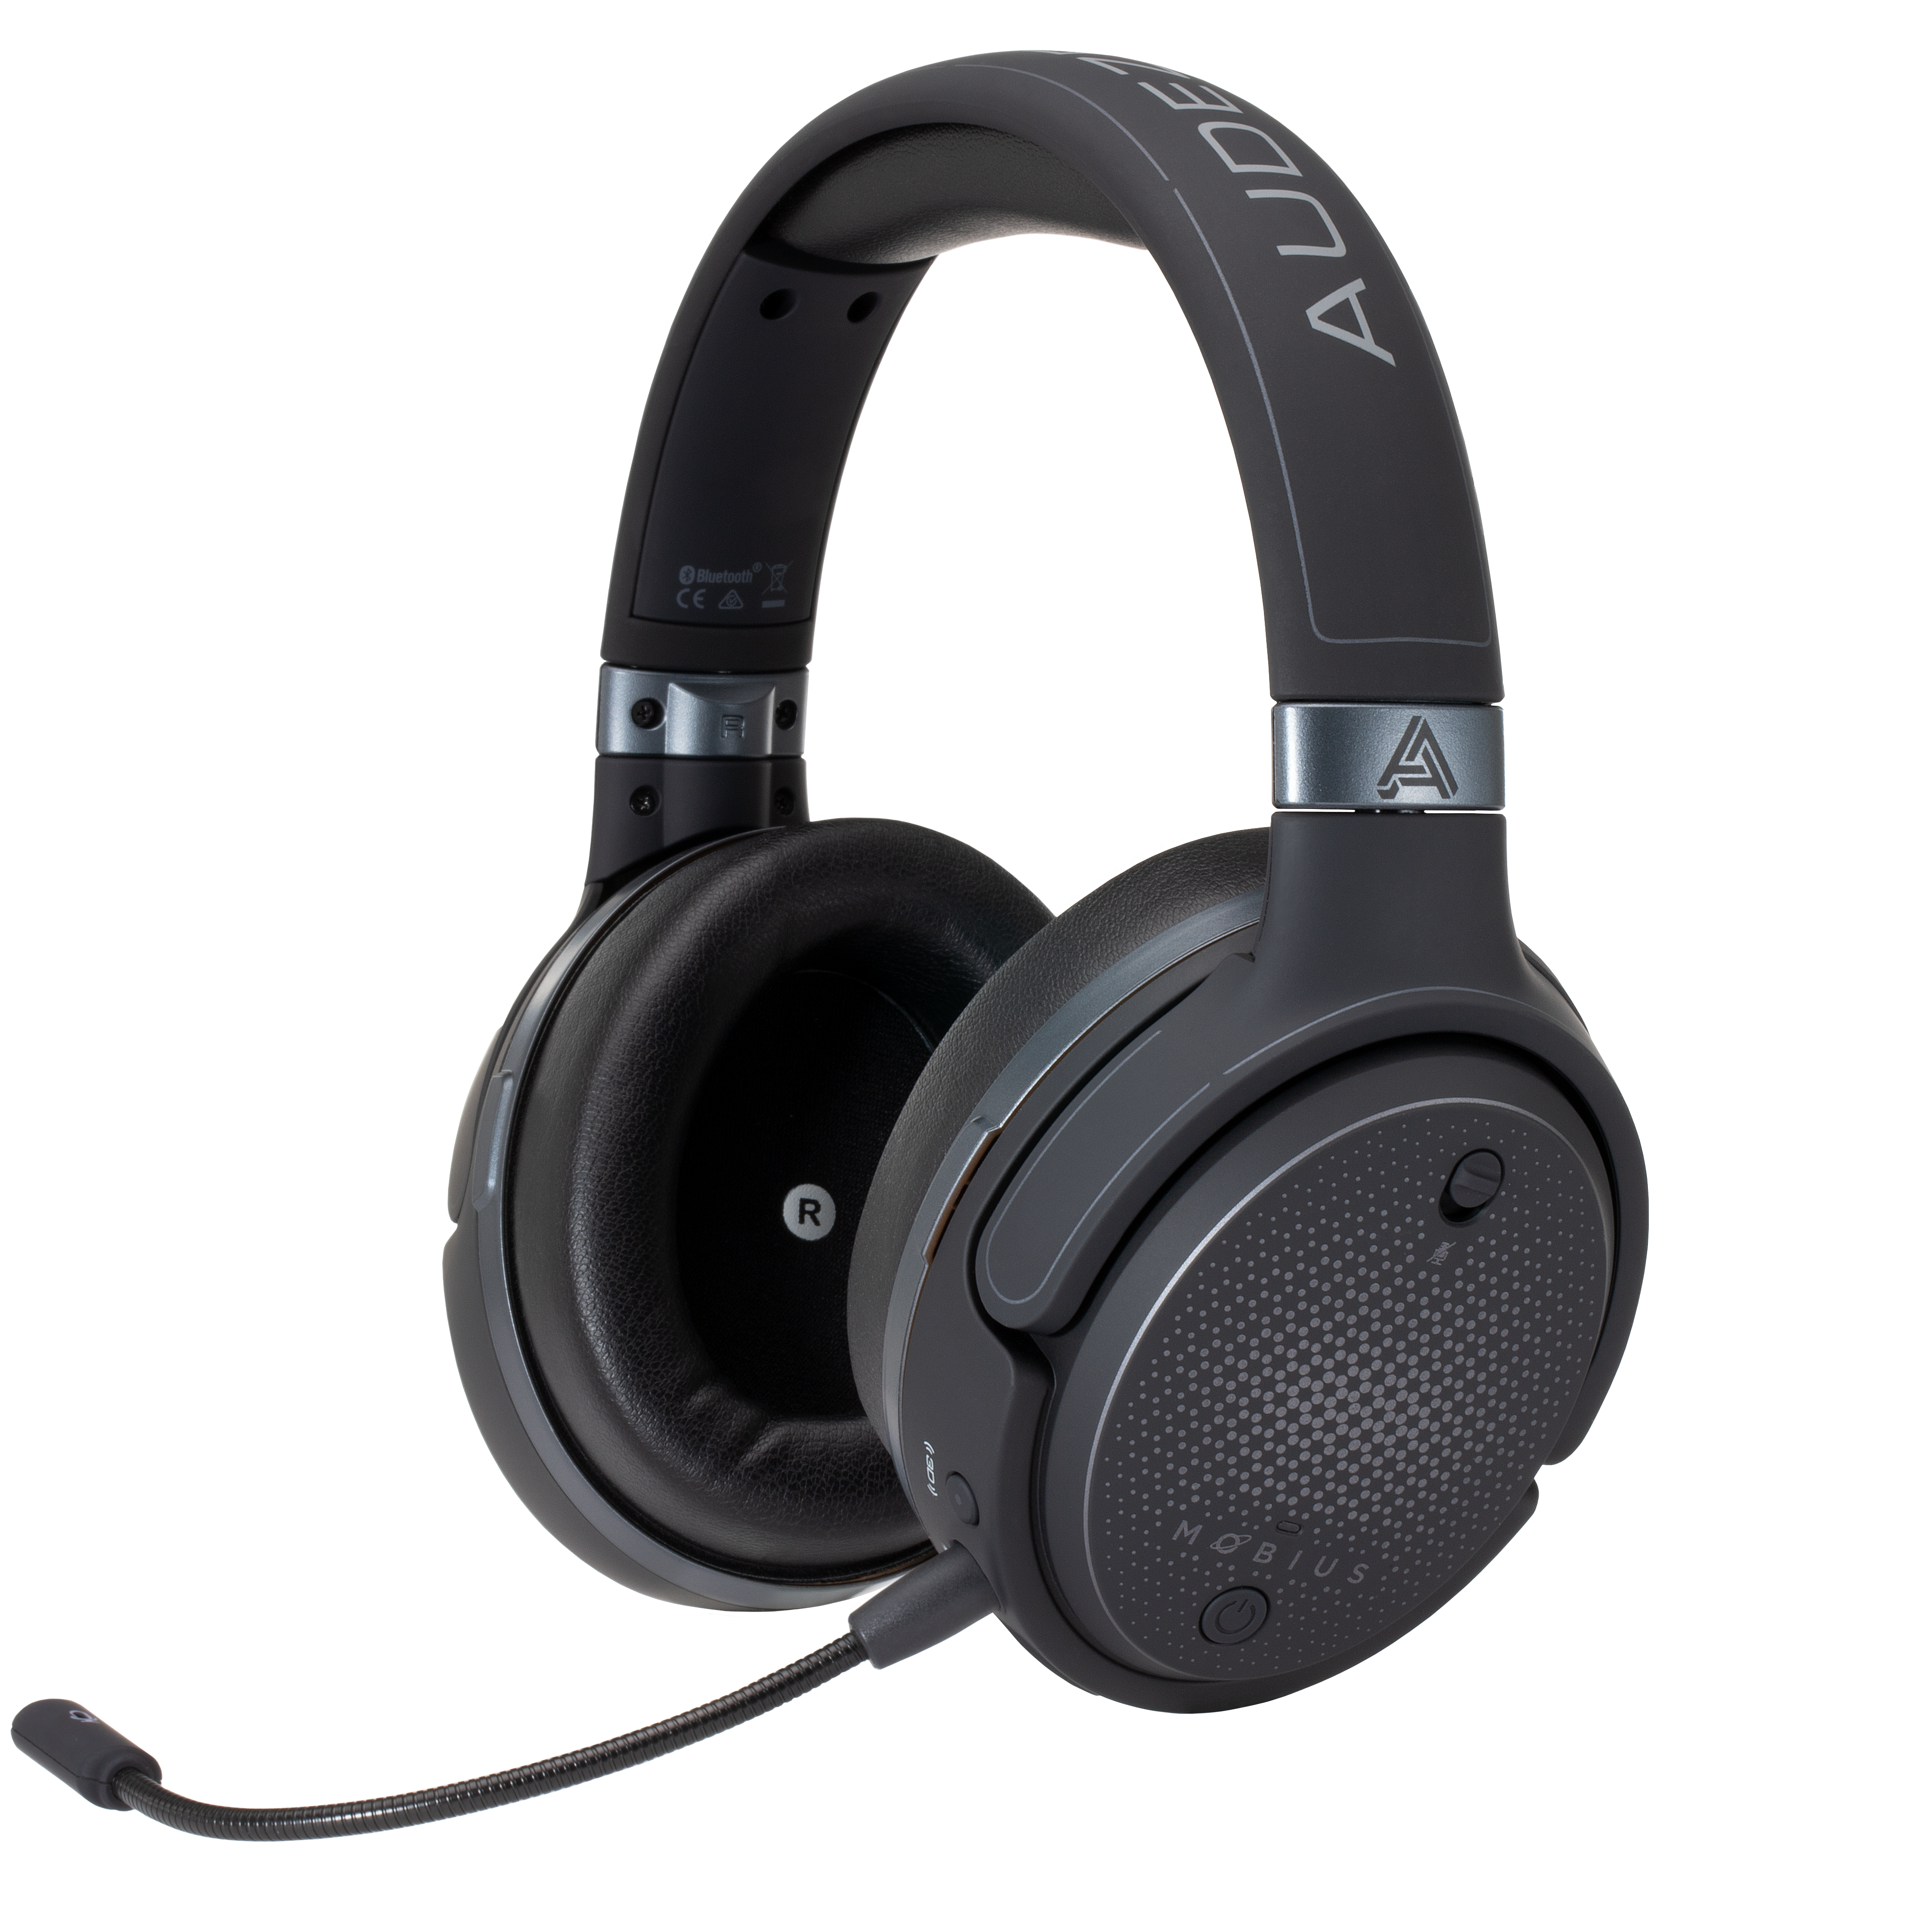 Audeze Mobius Spatial Audio Headset, Best for Immersive Gaming - Audeze LLC